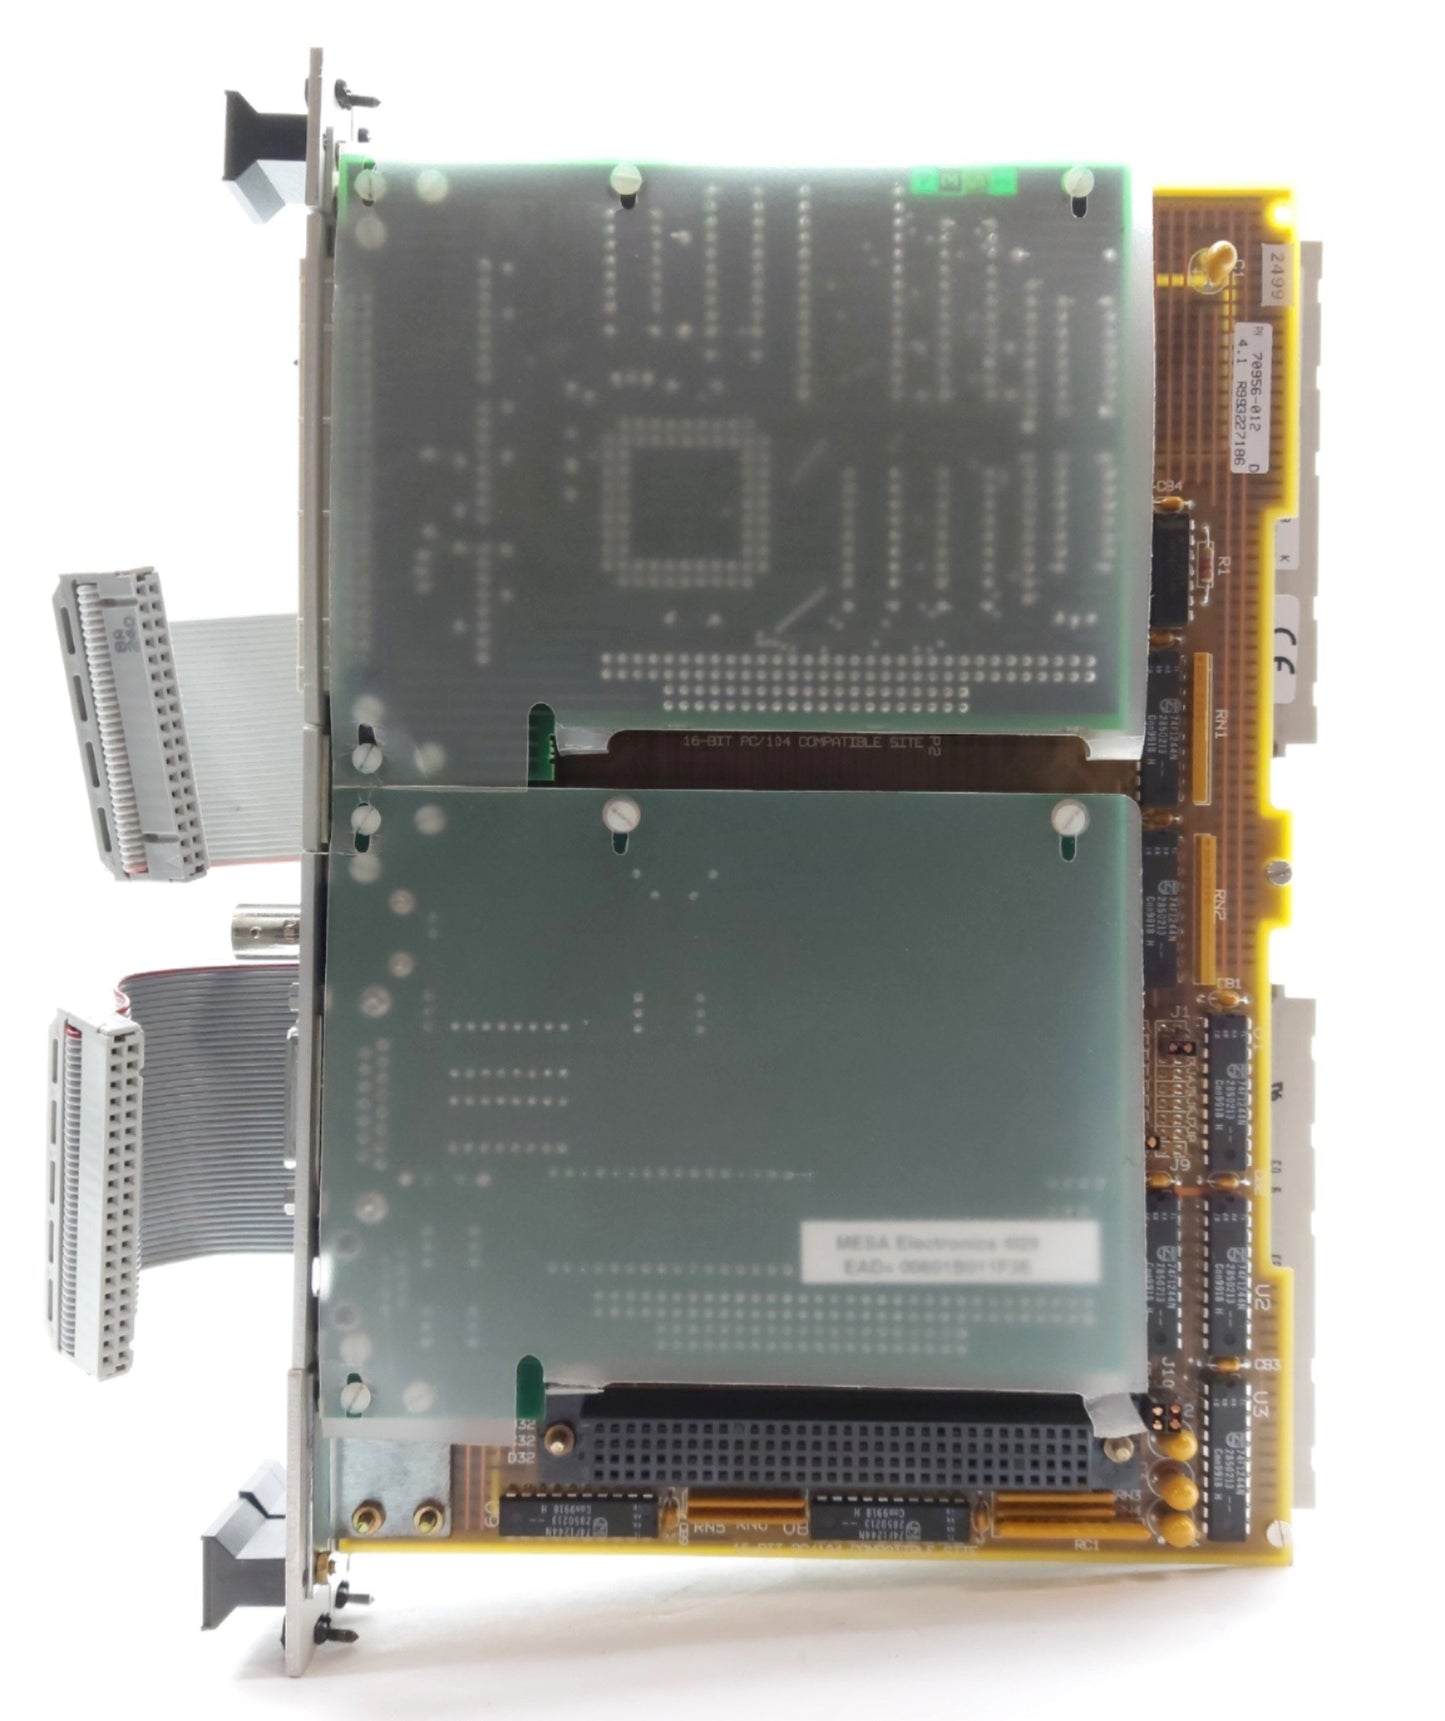 Used Xycom XVME-675 PC Processor Module w/SCSI & Network Card, Intel 486 100Mhz, VGA